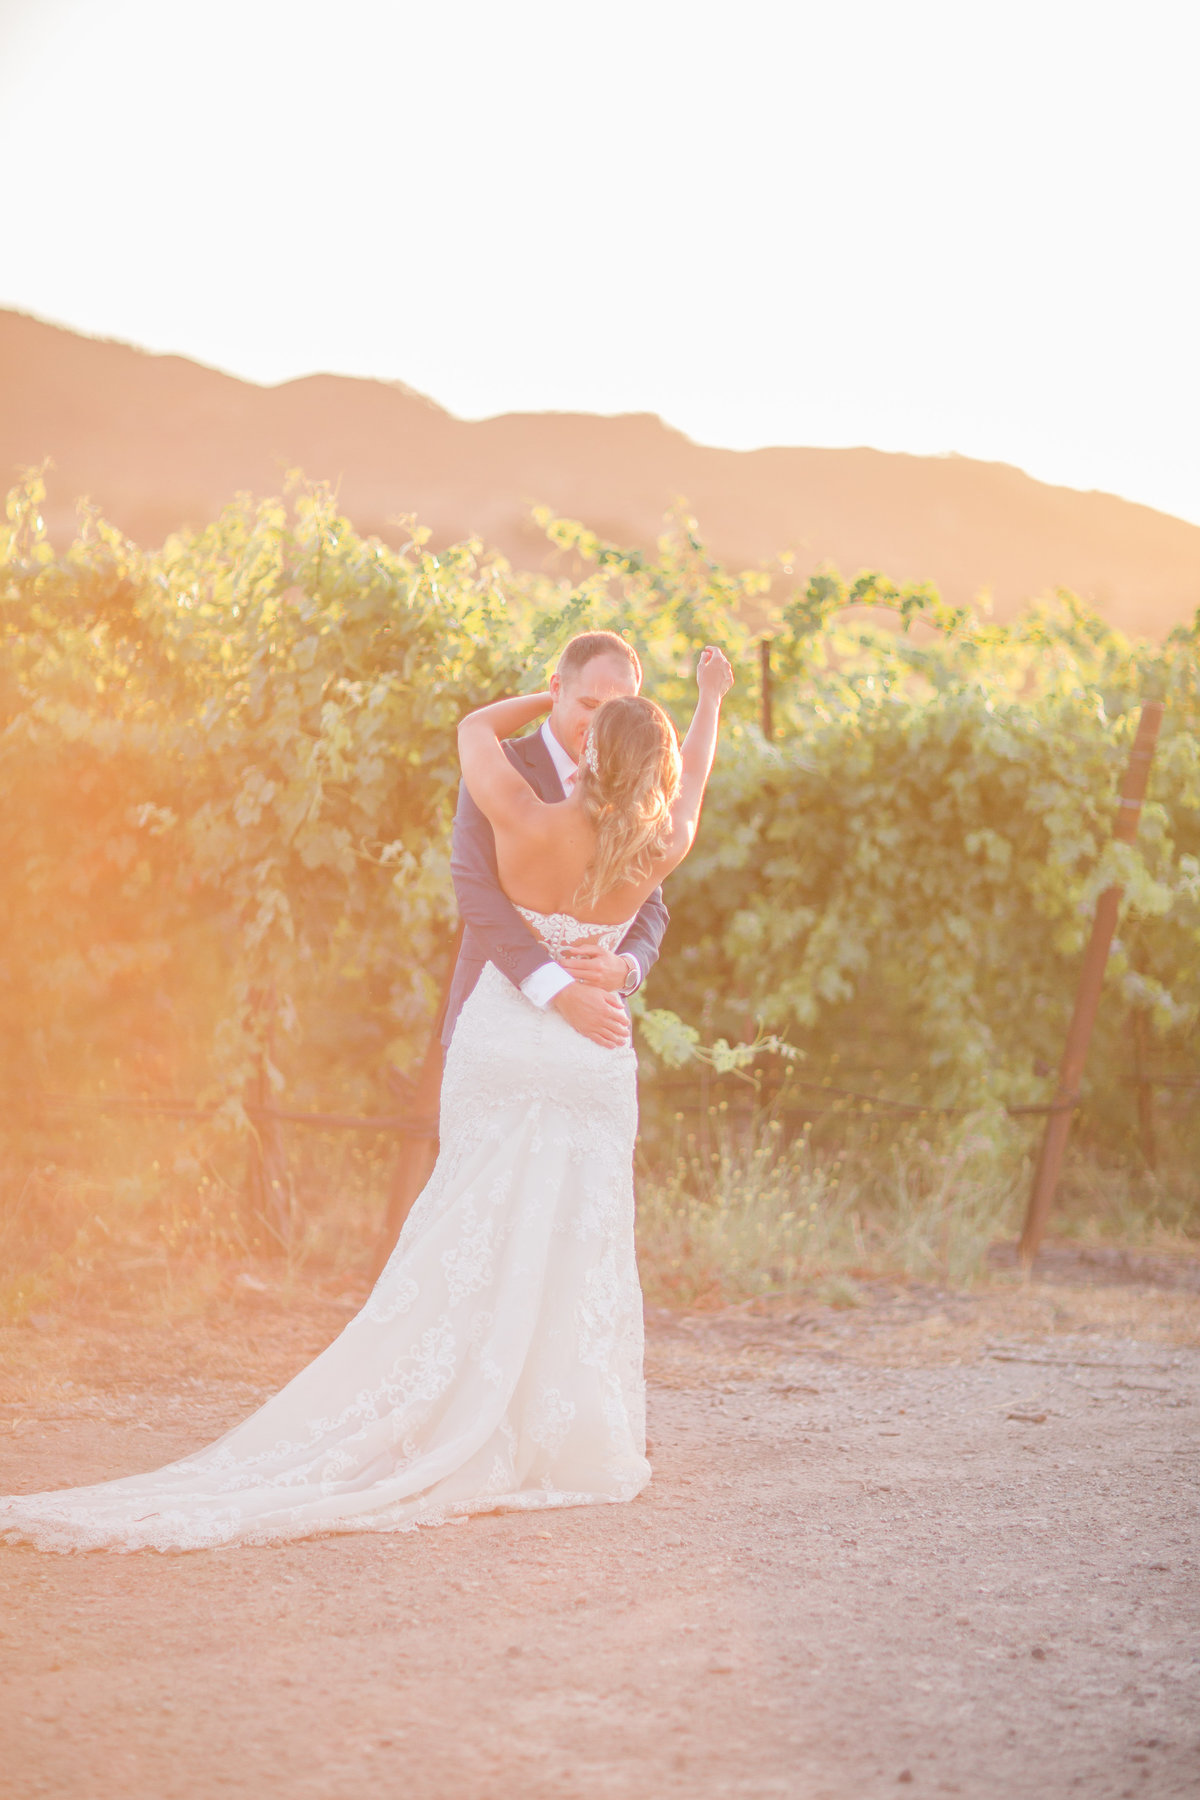 Jenna & Andrew's Oyster Ridge Wedding | Paso Robles Wedding Photographer | Katie Schoepflin Photography566